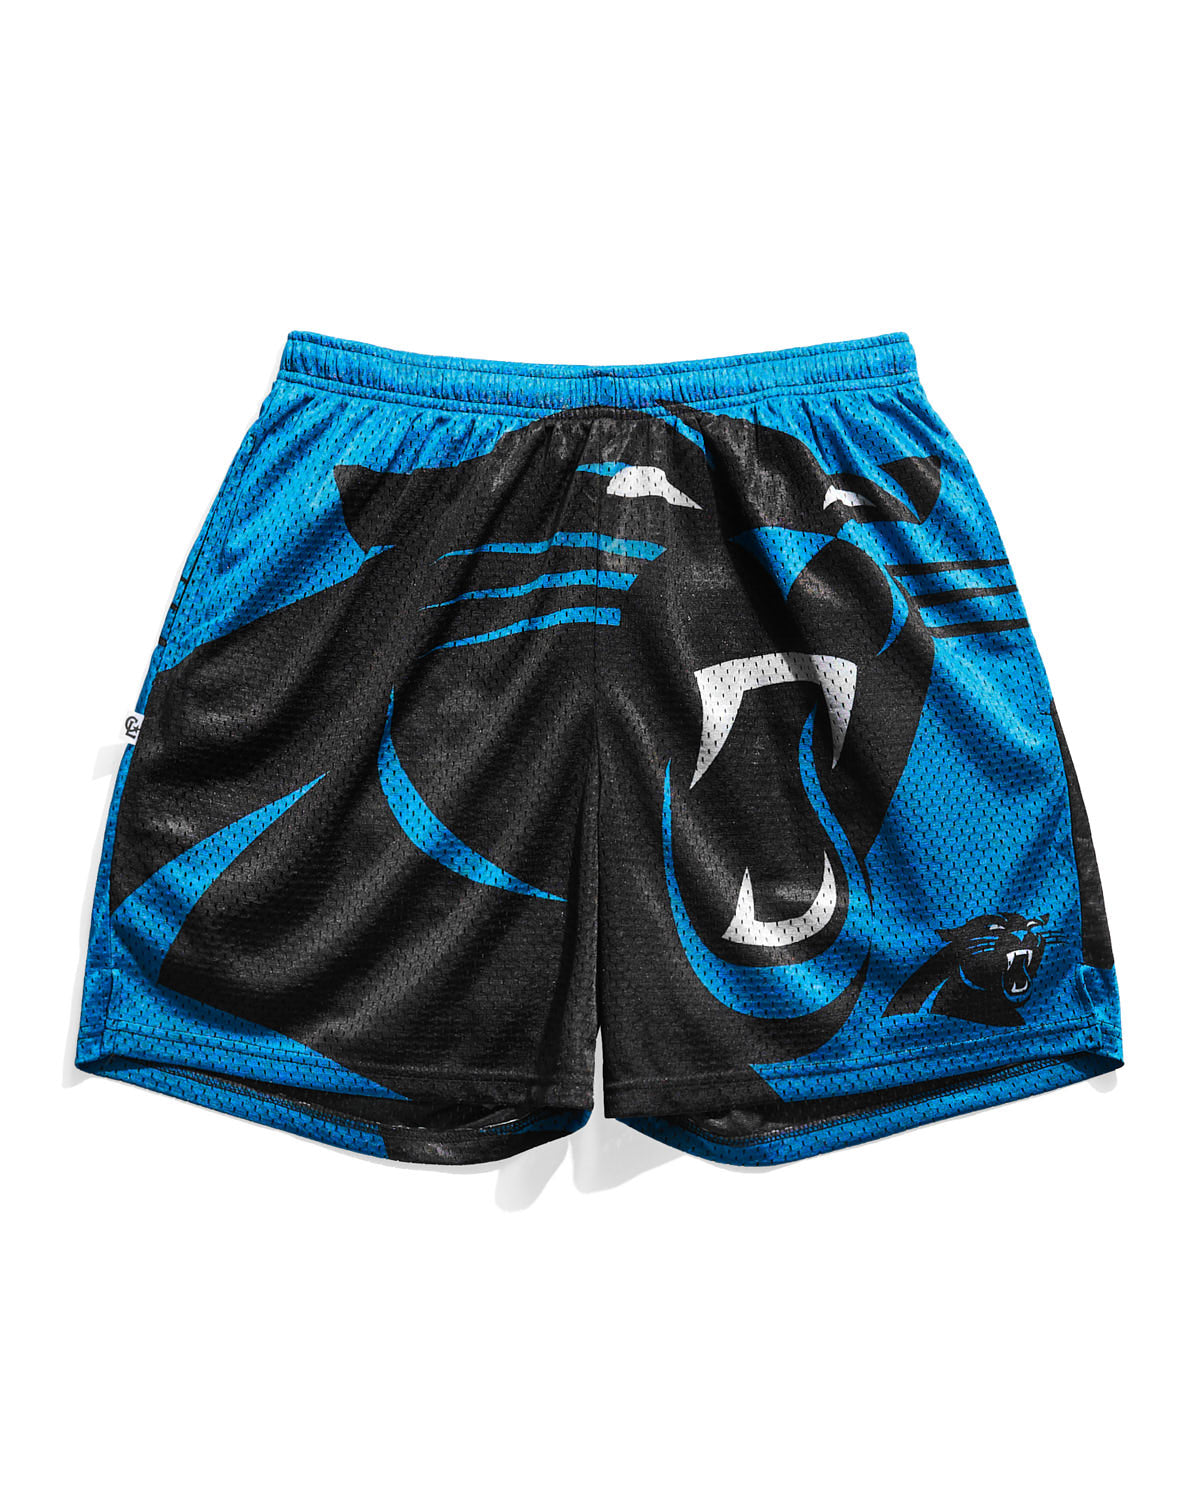 Carolina Panthers Big Logo Retro Shorts